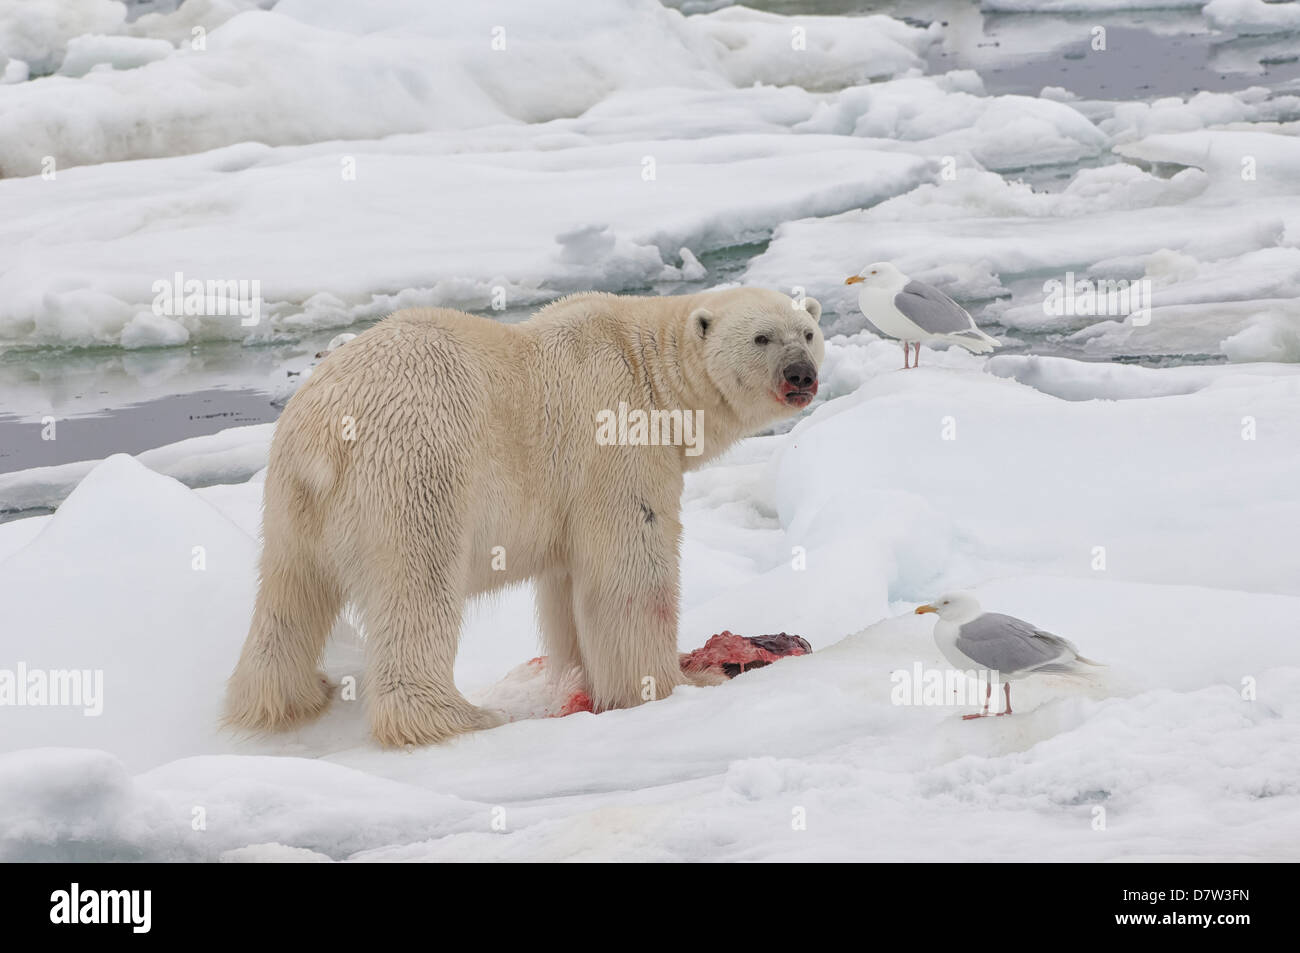 Male polar bear (Ursus maritimus) with a seal prey, Svalbard Archipelago, Barents Sea, Norway, Scandinavia Stock Photo